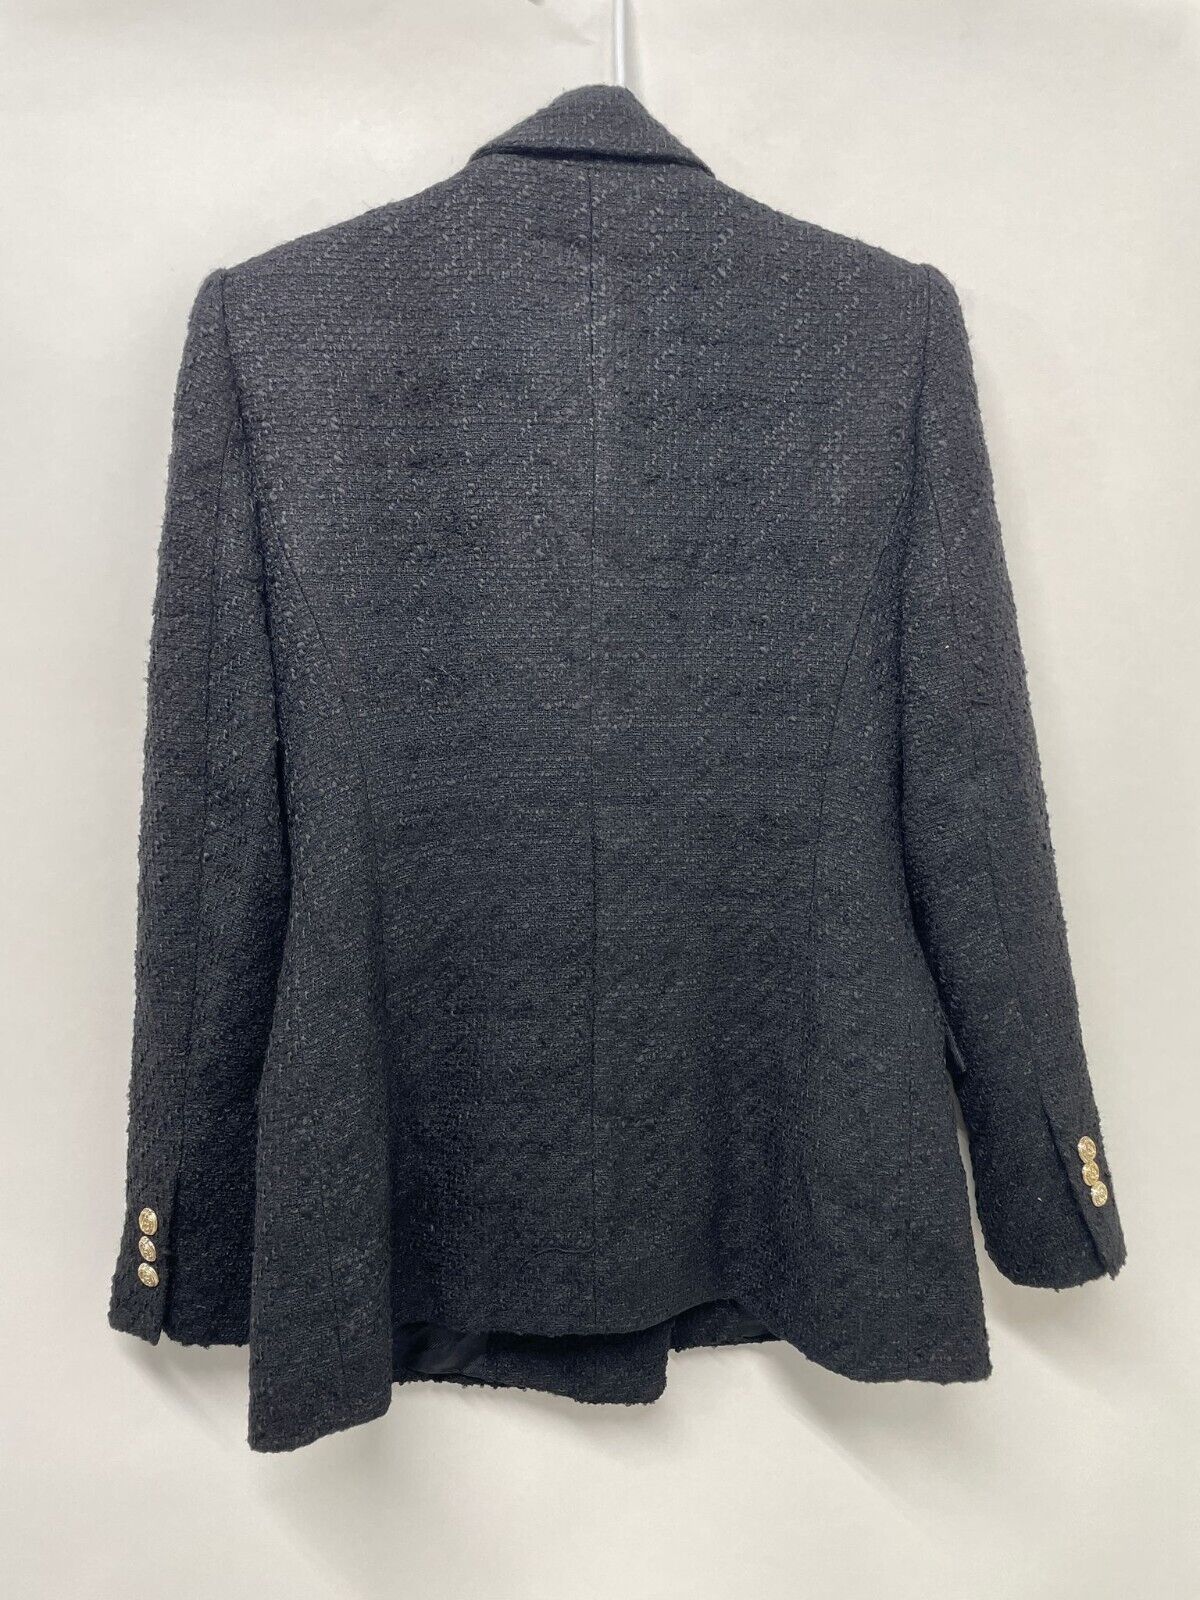 Zara Womens M Black Textured Double Breasted Blazer 7553/457 Jacket Tweed Weave